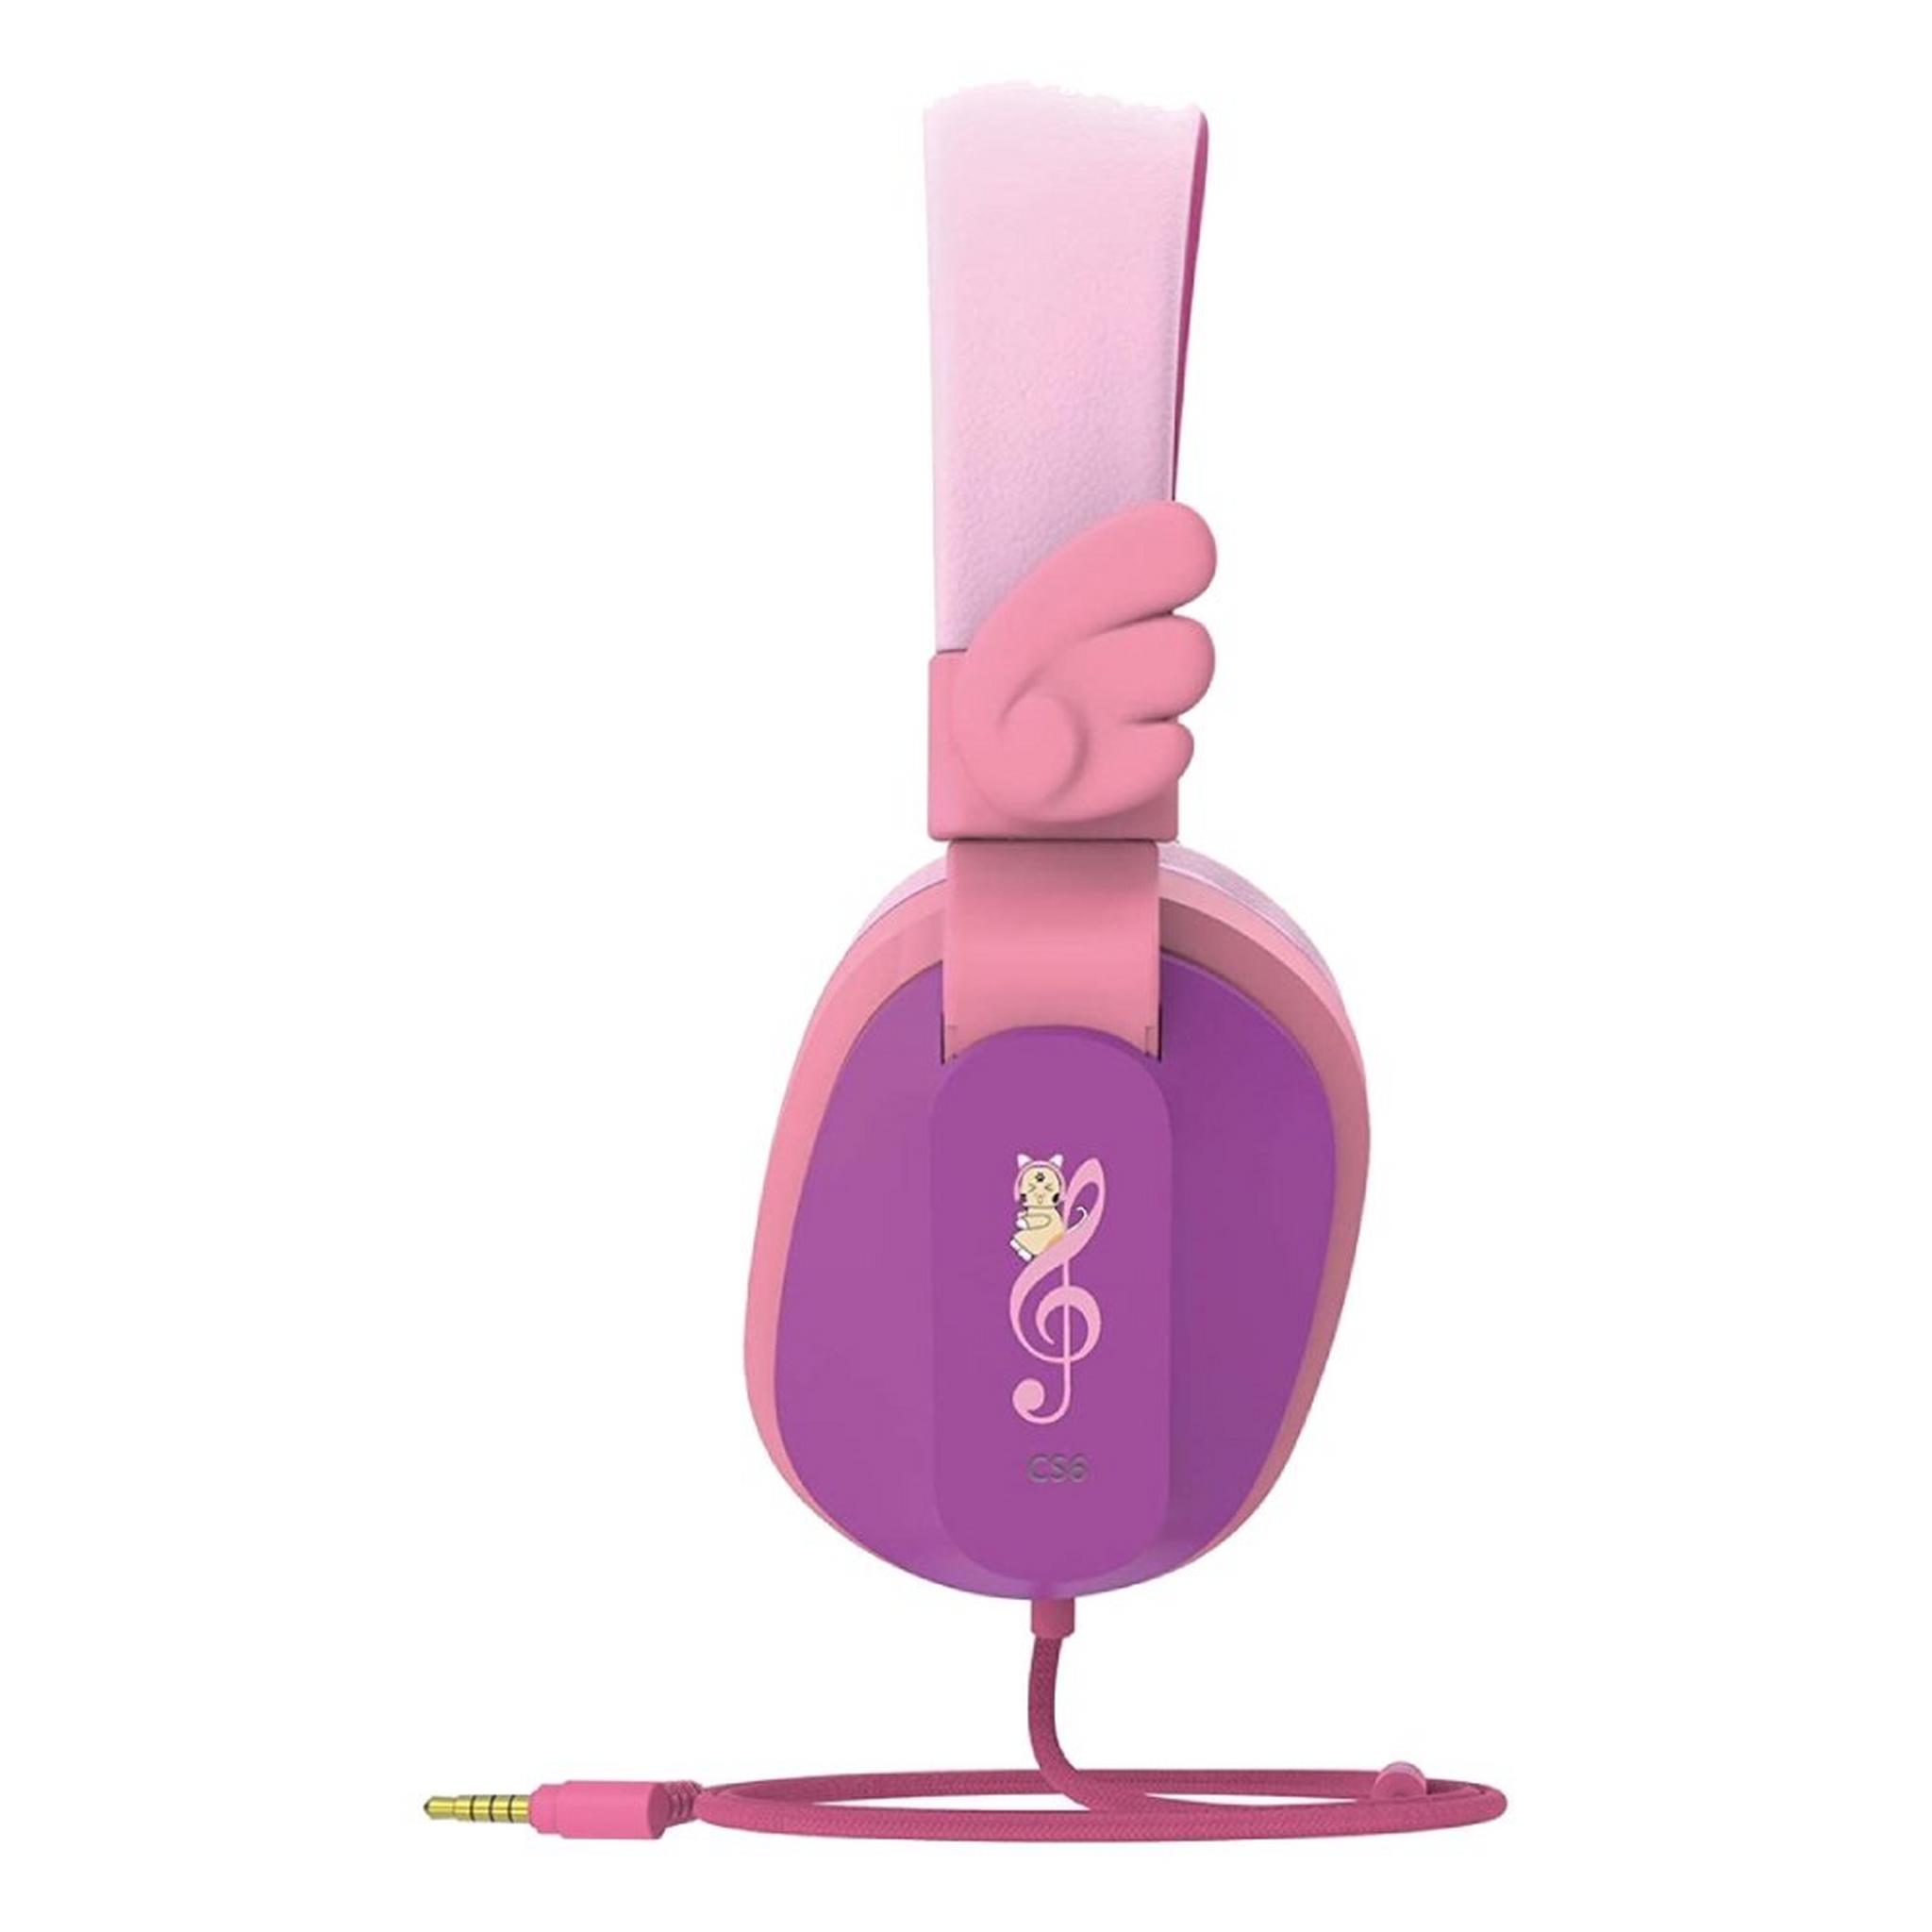 Riwbox Kids Wired Over-Ear Headphones - Purple/Pink